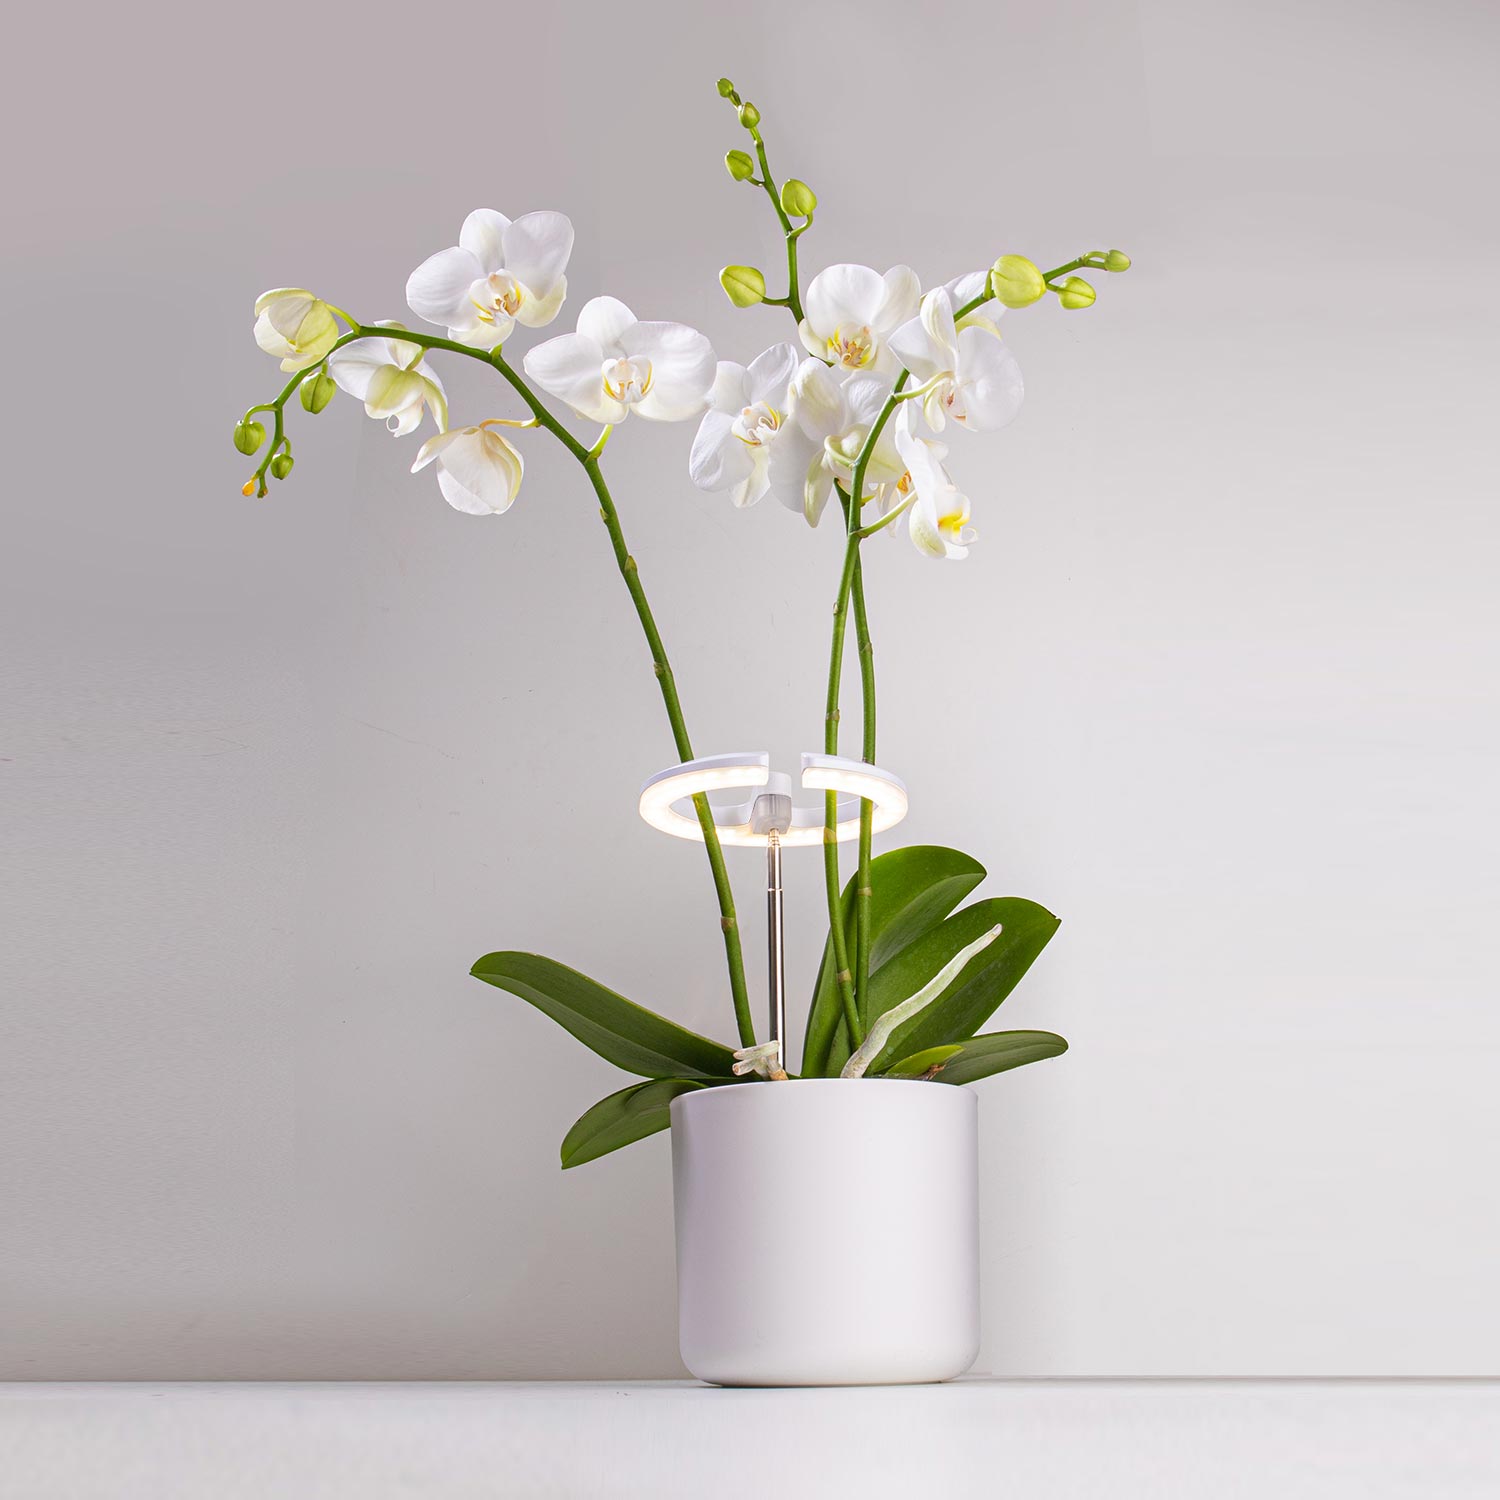 TG012 Full Spectrum Plants LED աճող այգիների դեկորատիվ լամպ ներքին աճող բույսերի համար